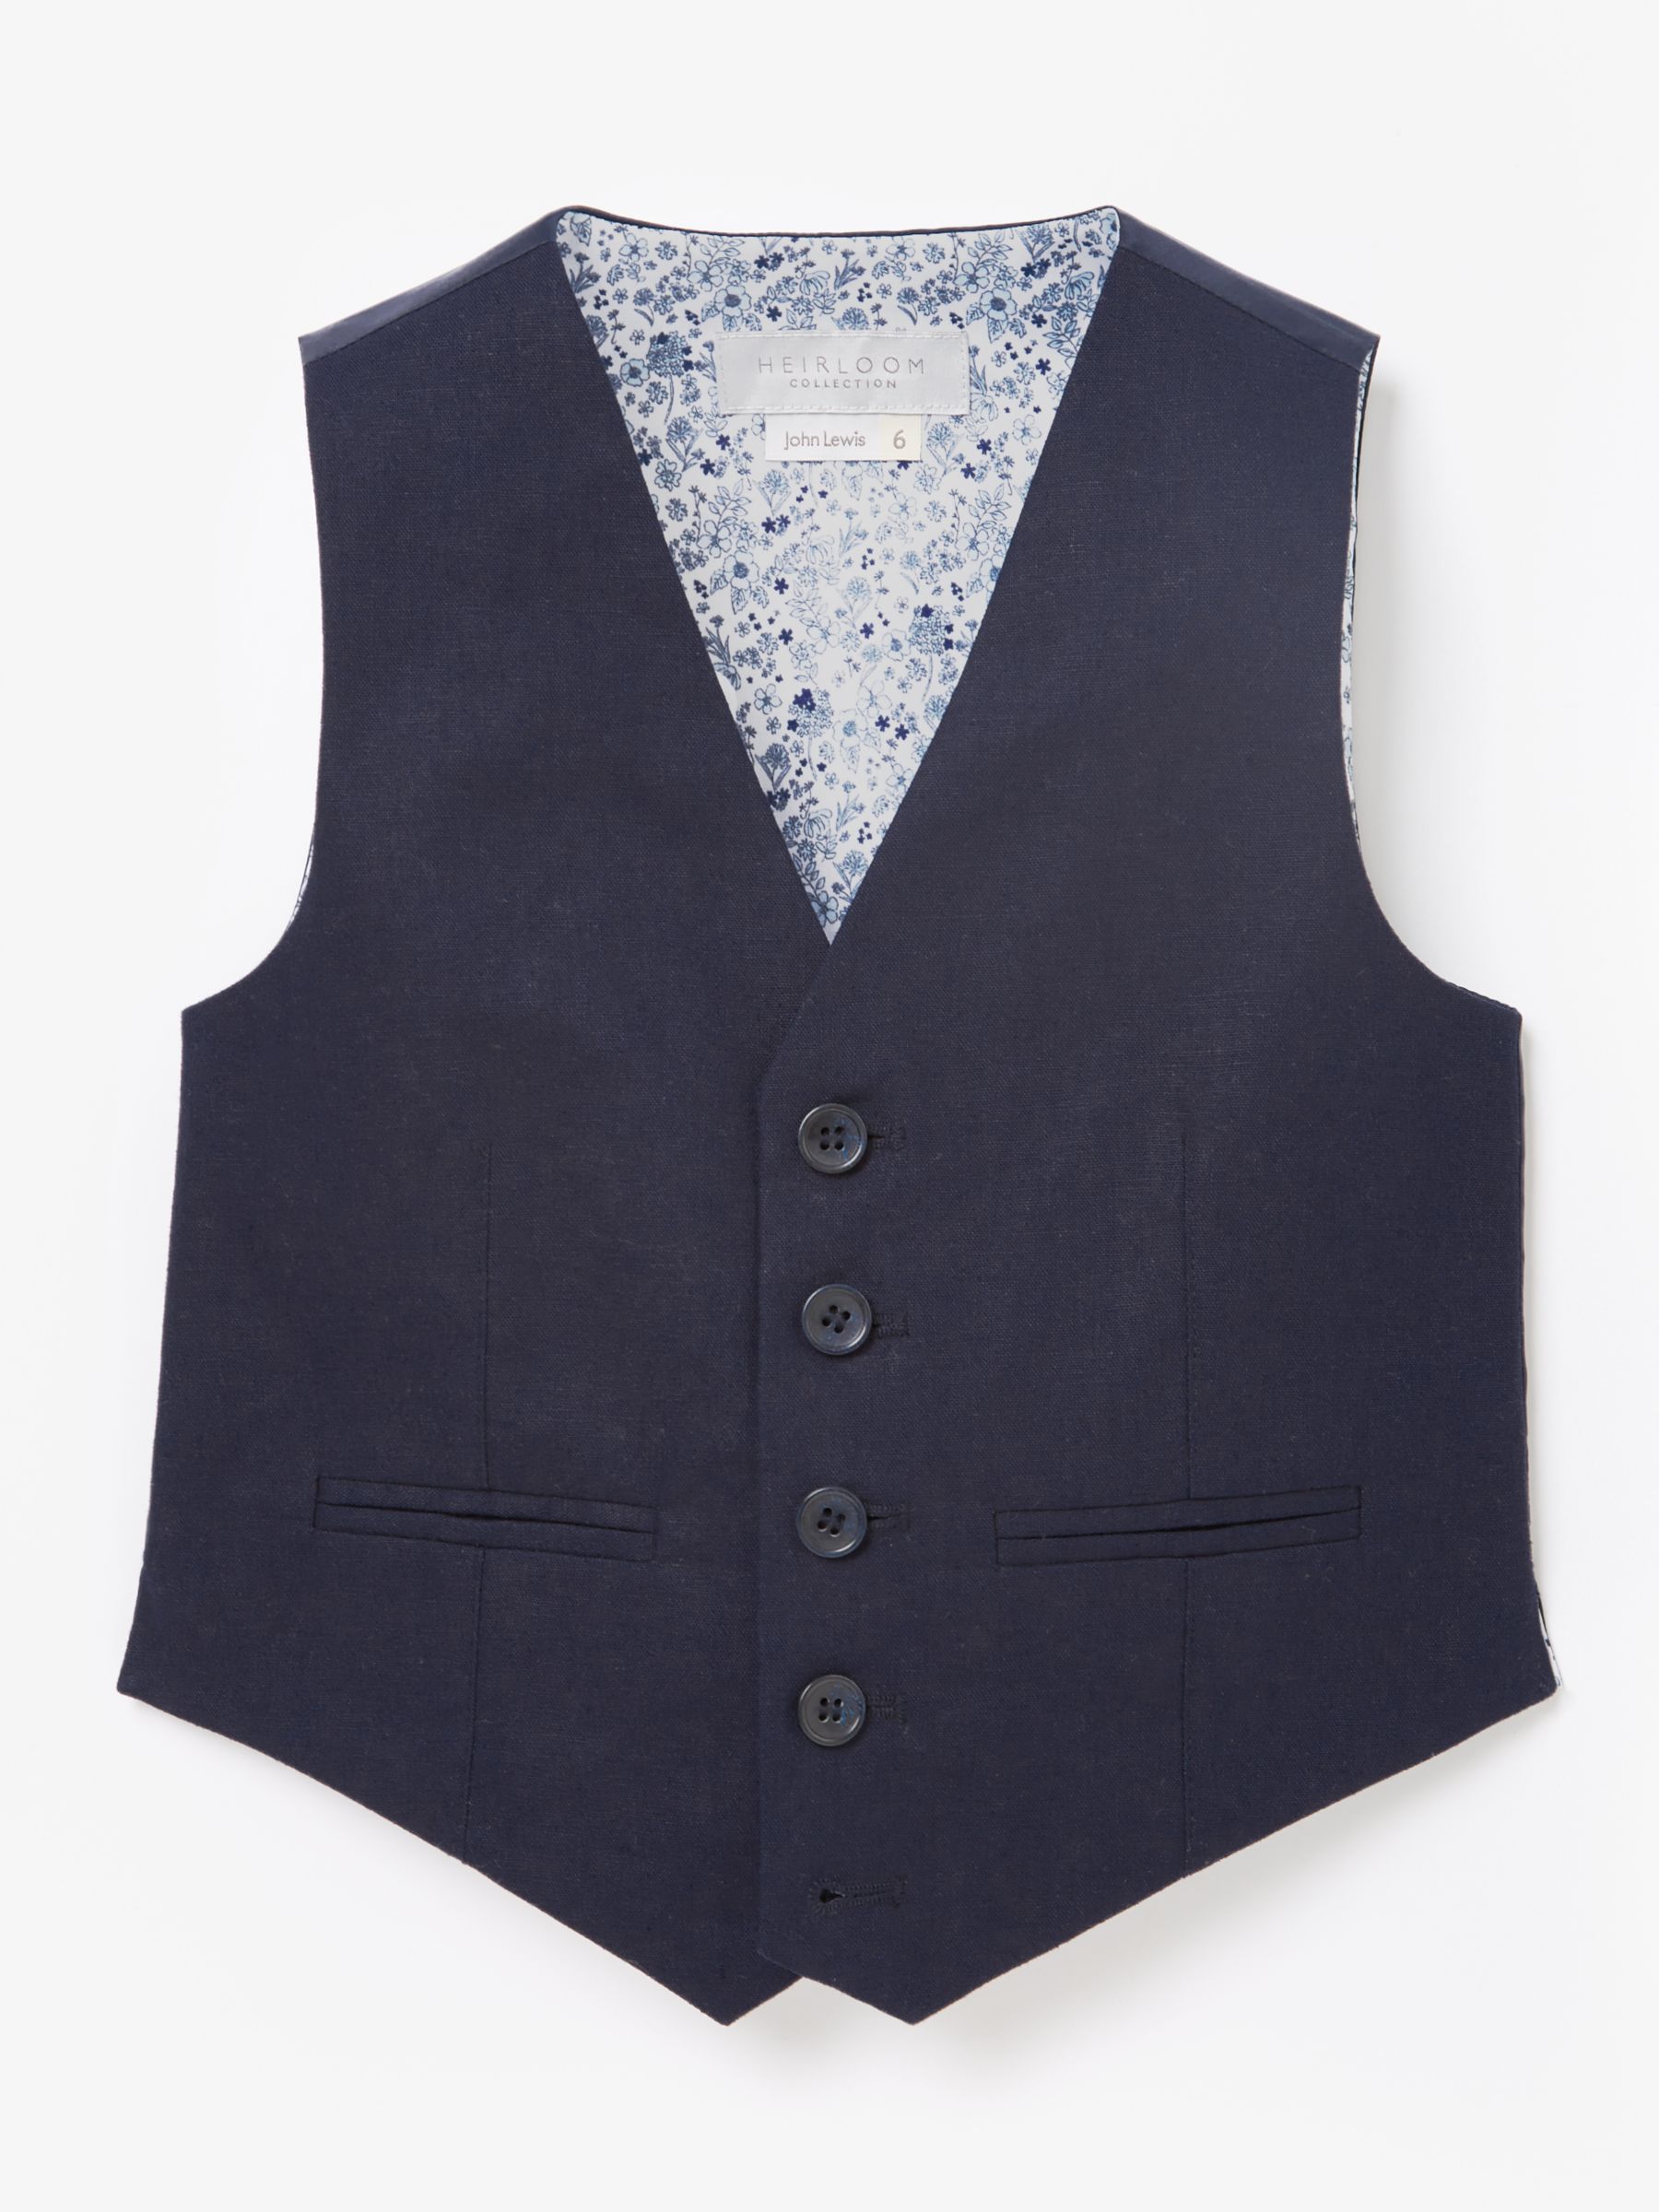 John Lewis & Partners Heirloom Collection Boys' Linen Blend Waistcoat, Navy